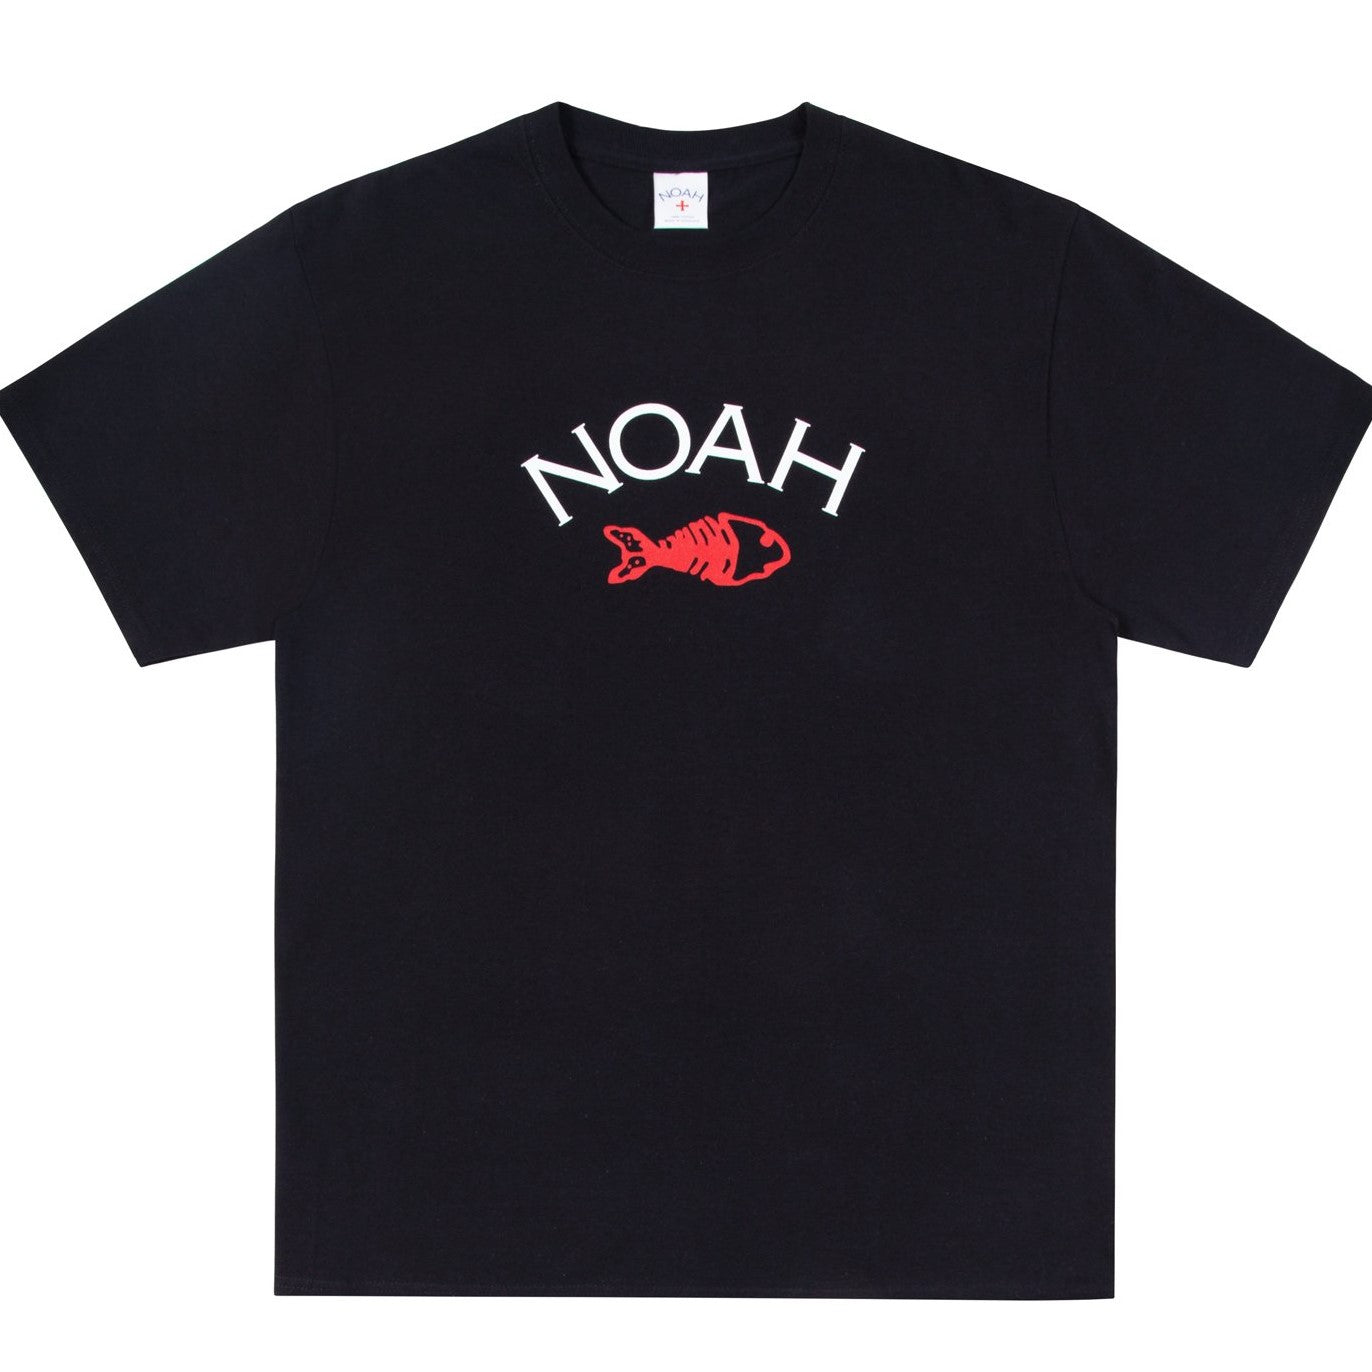 Noah Fishbone Logo Tee - Black